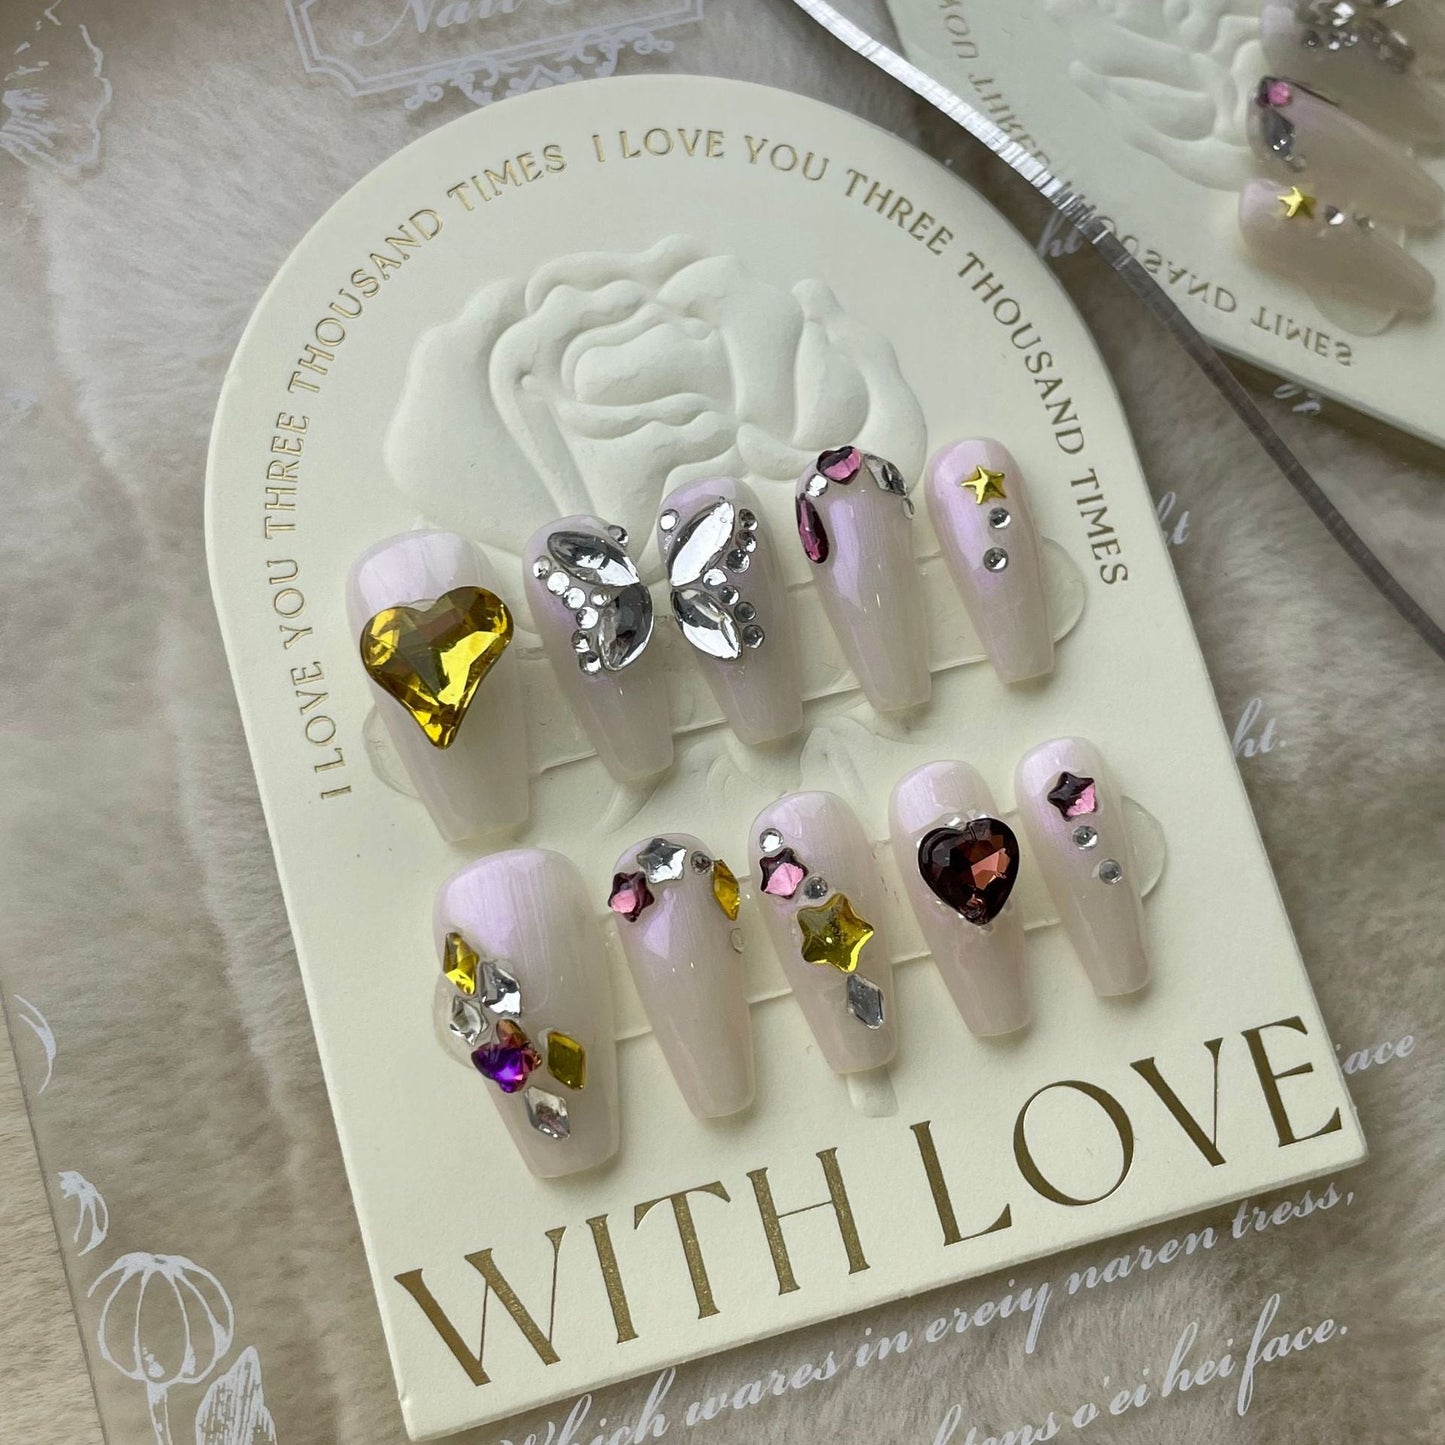 561 Butterfly Rhinestone style press on nails 100% handmade false nails pink